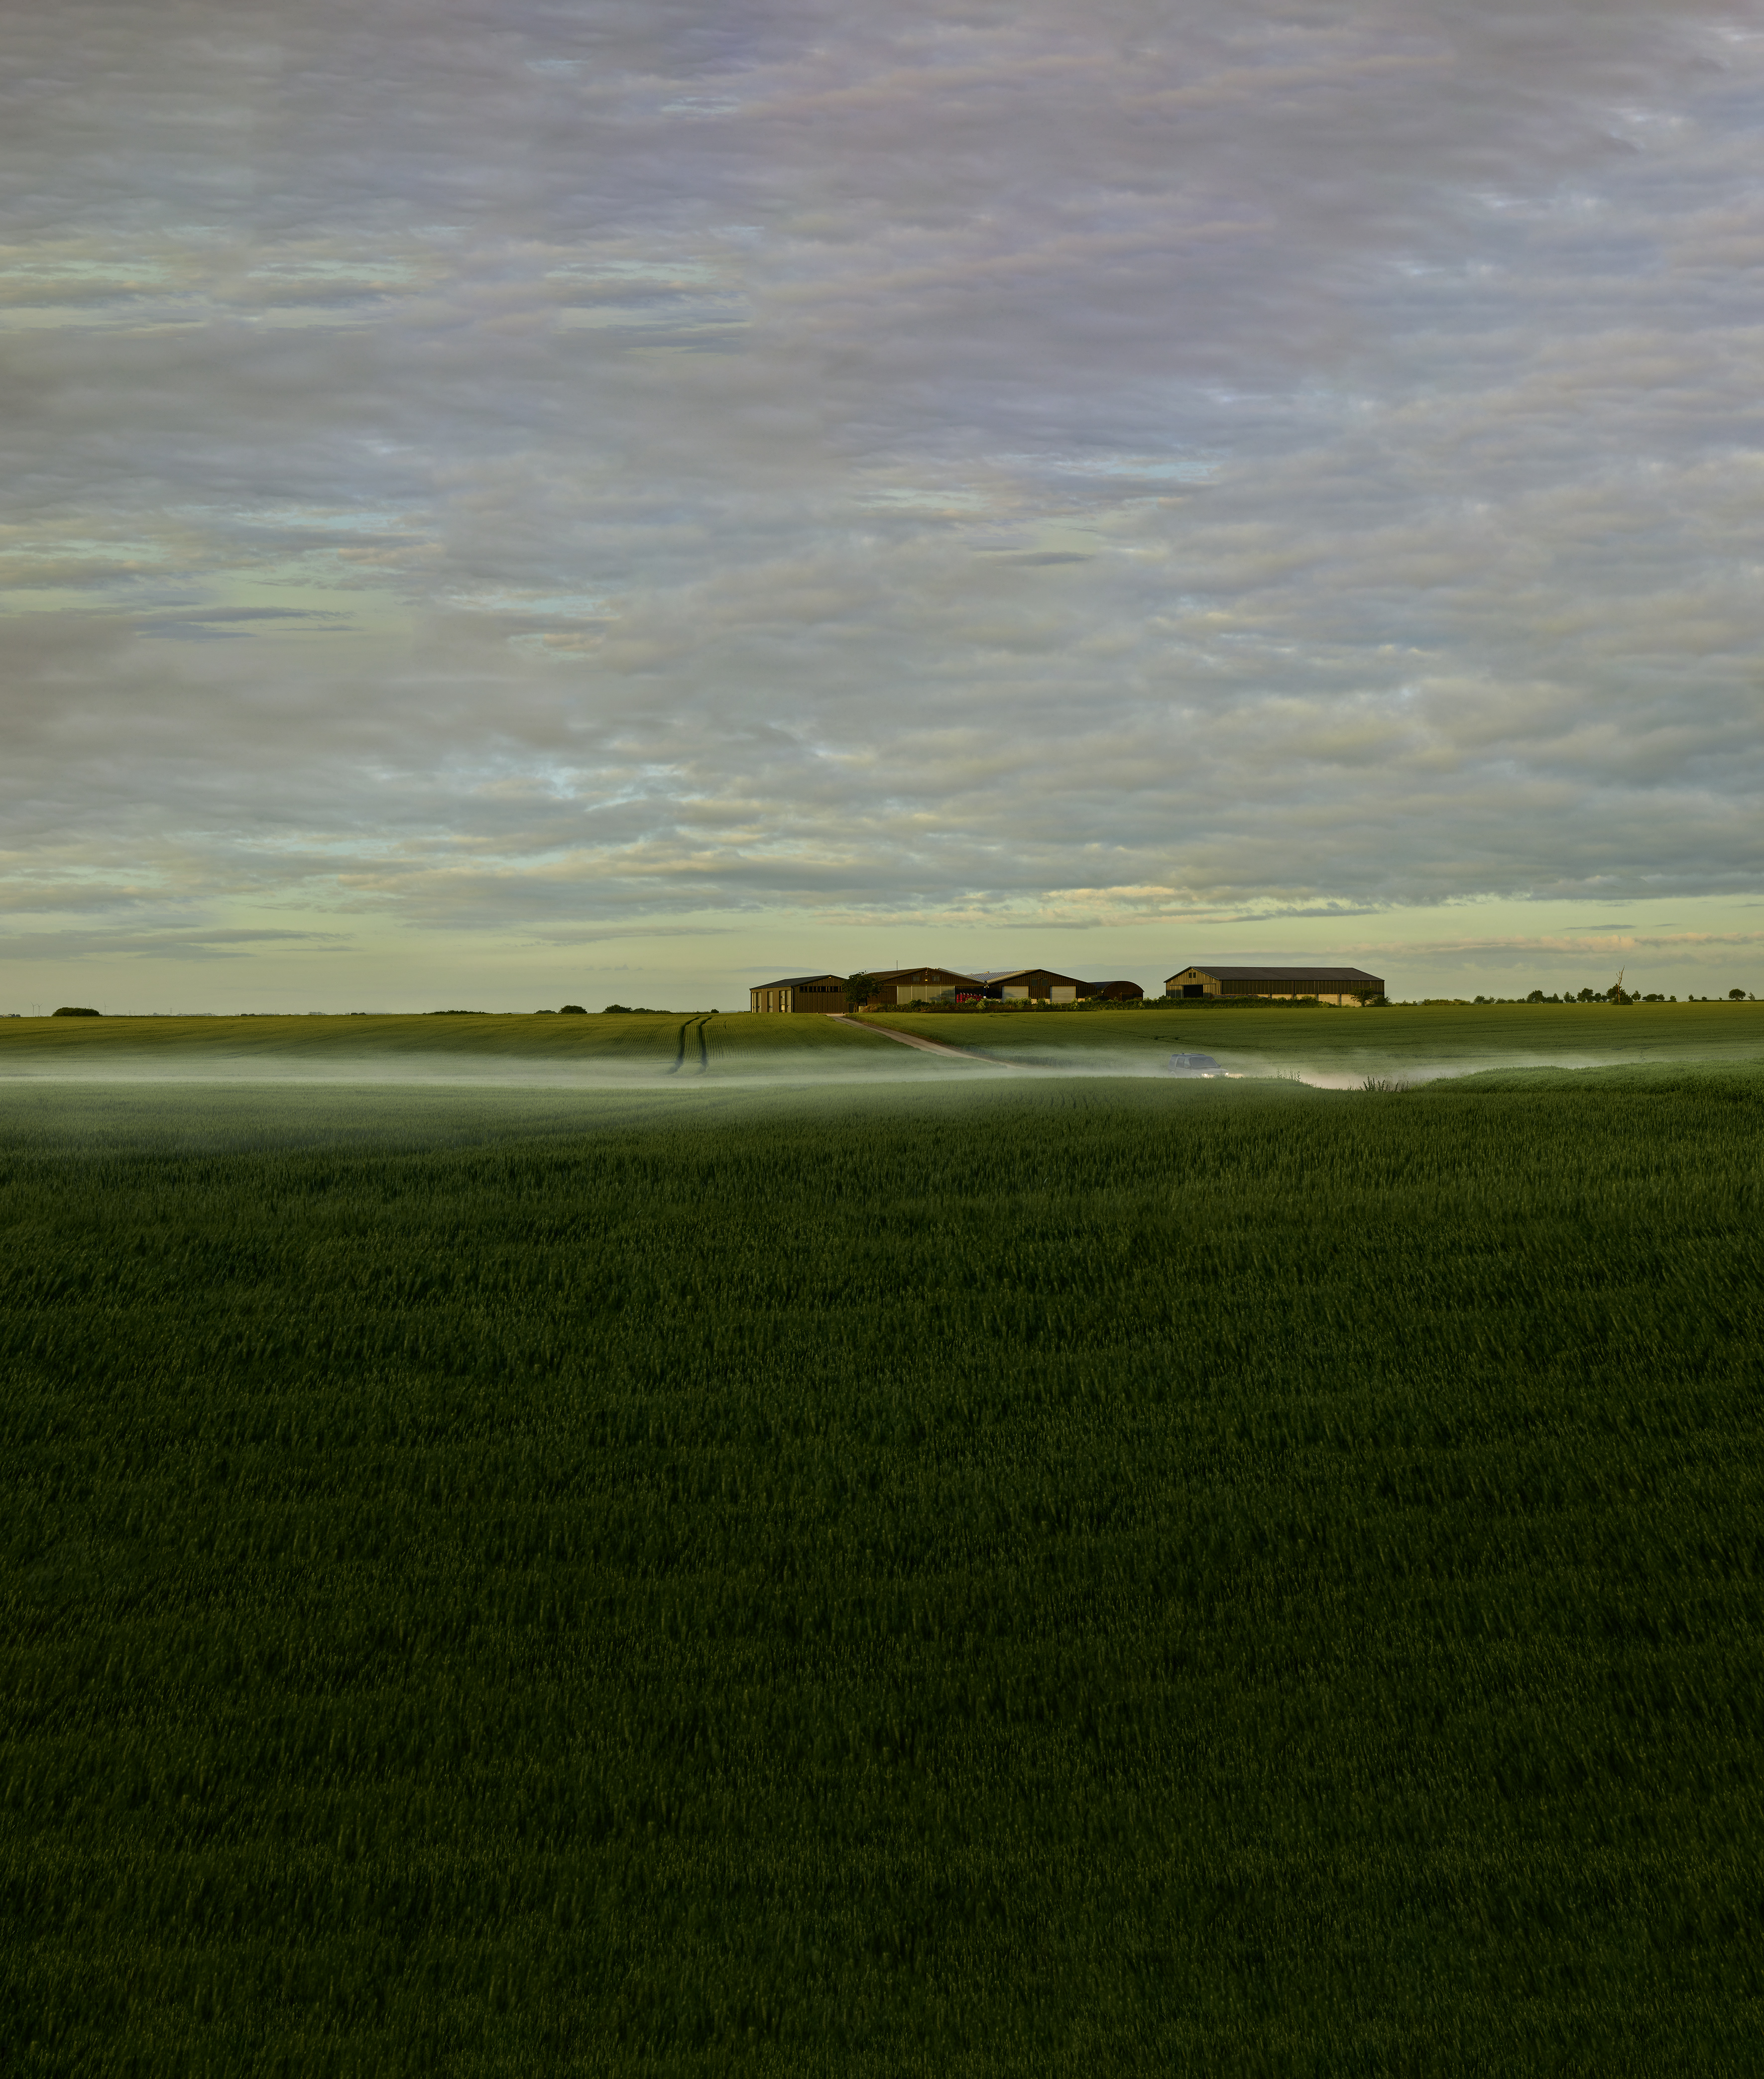 Panorama agrícola